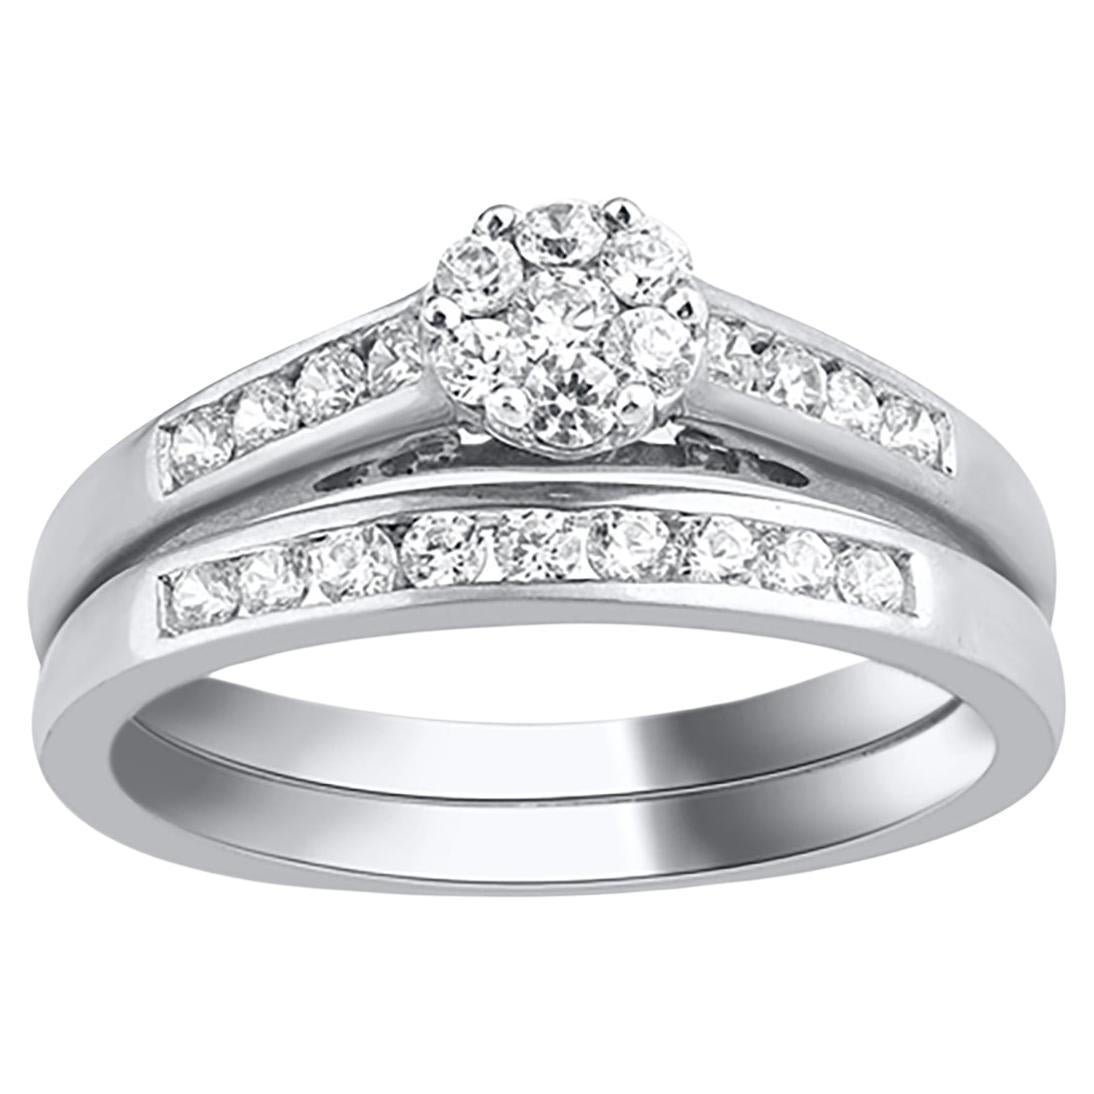 TJD 0.50 Carat Brilliant Cut Diamond 14KT White Gold Wedding Bridal Ring Set